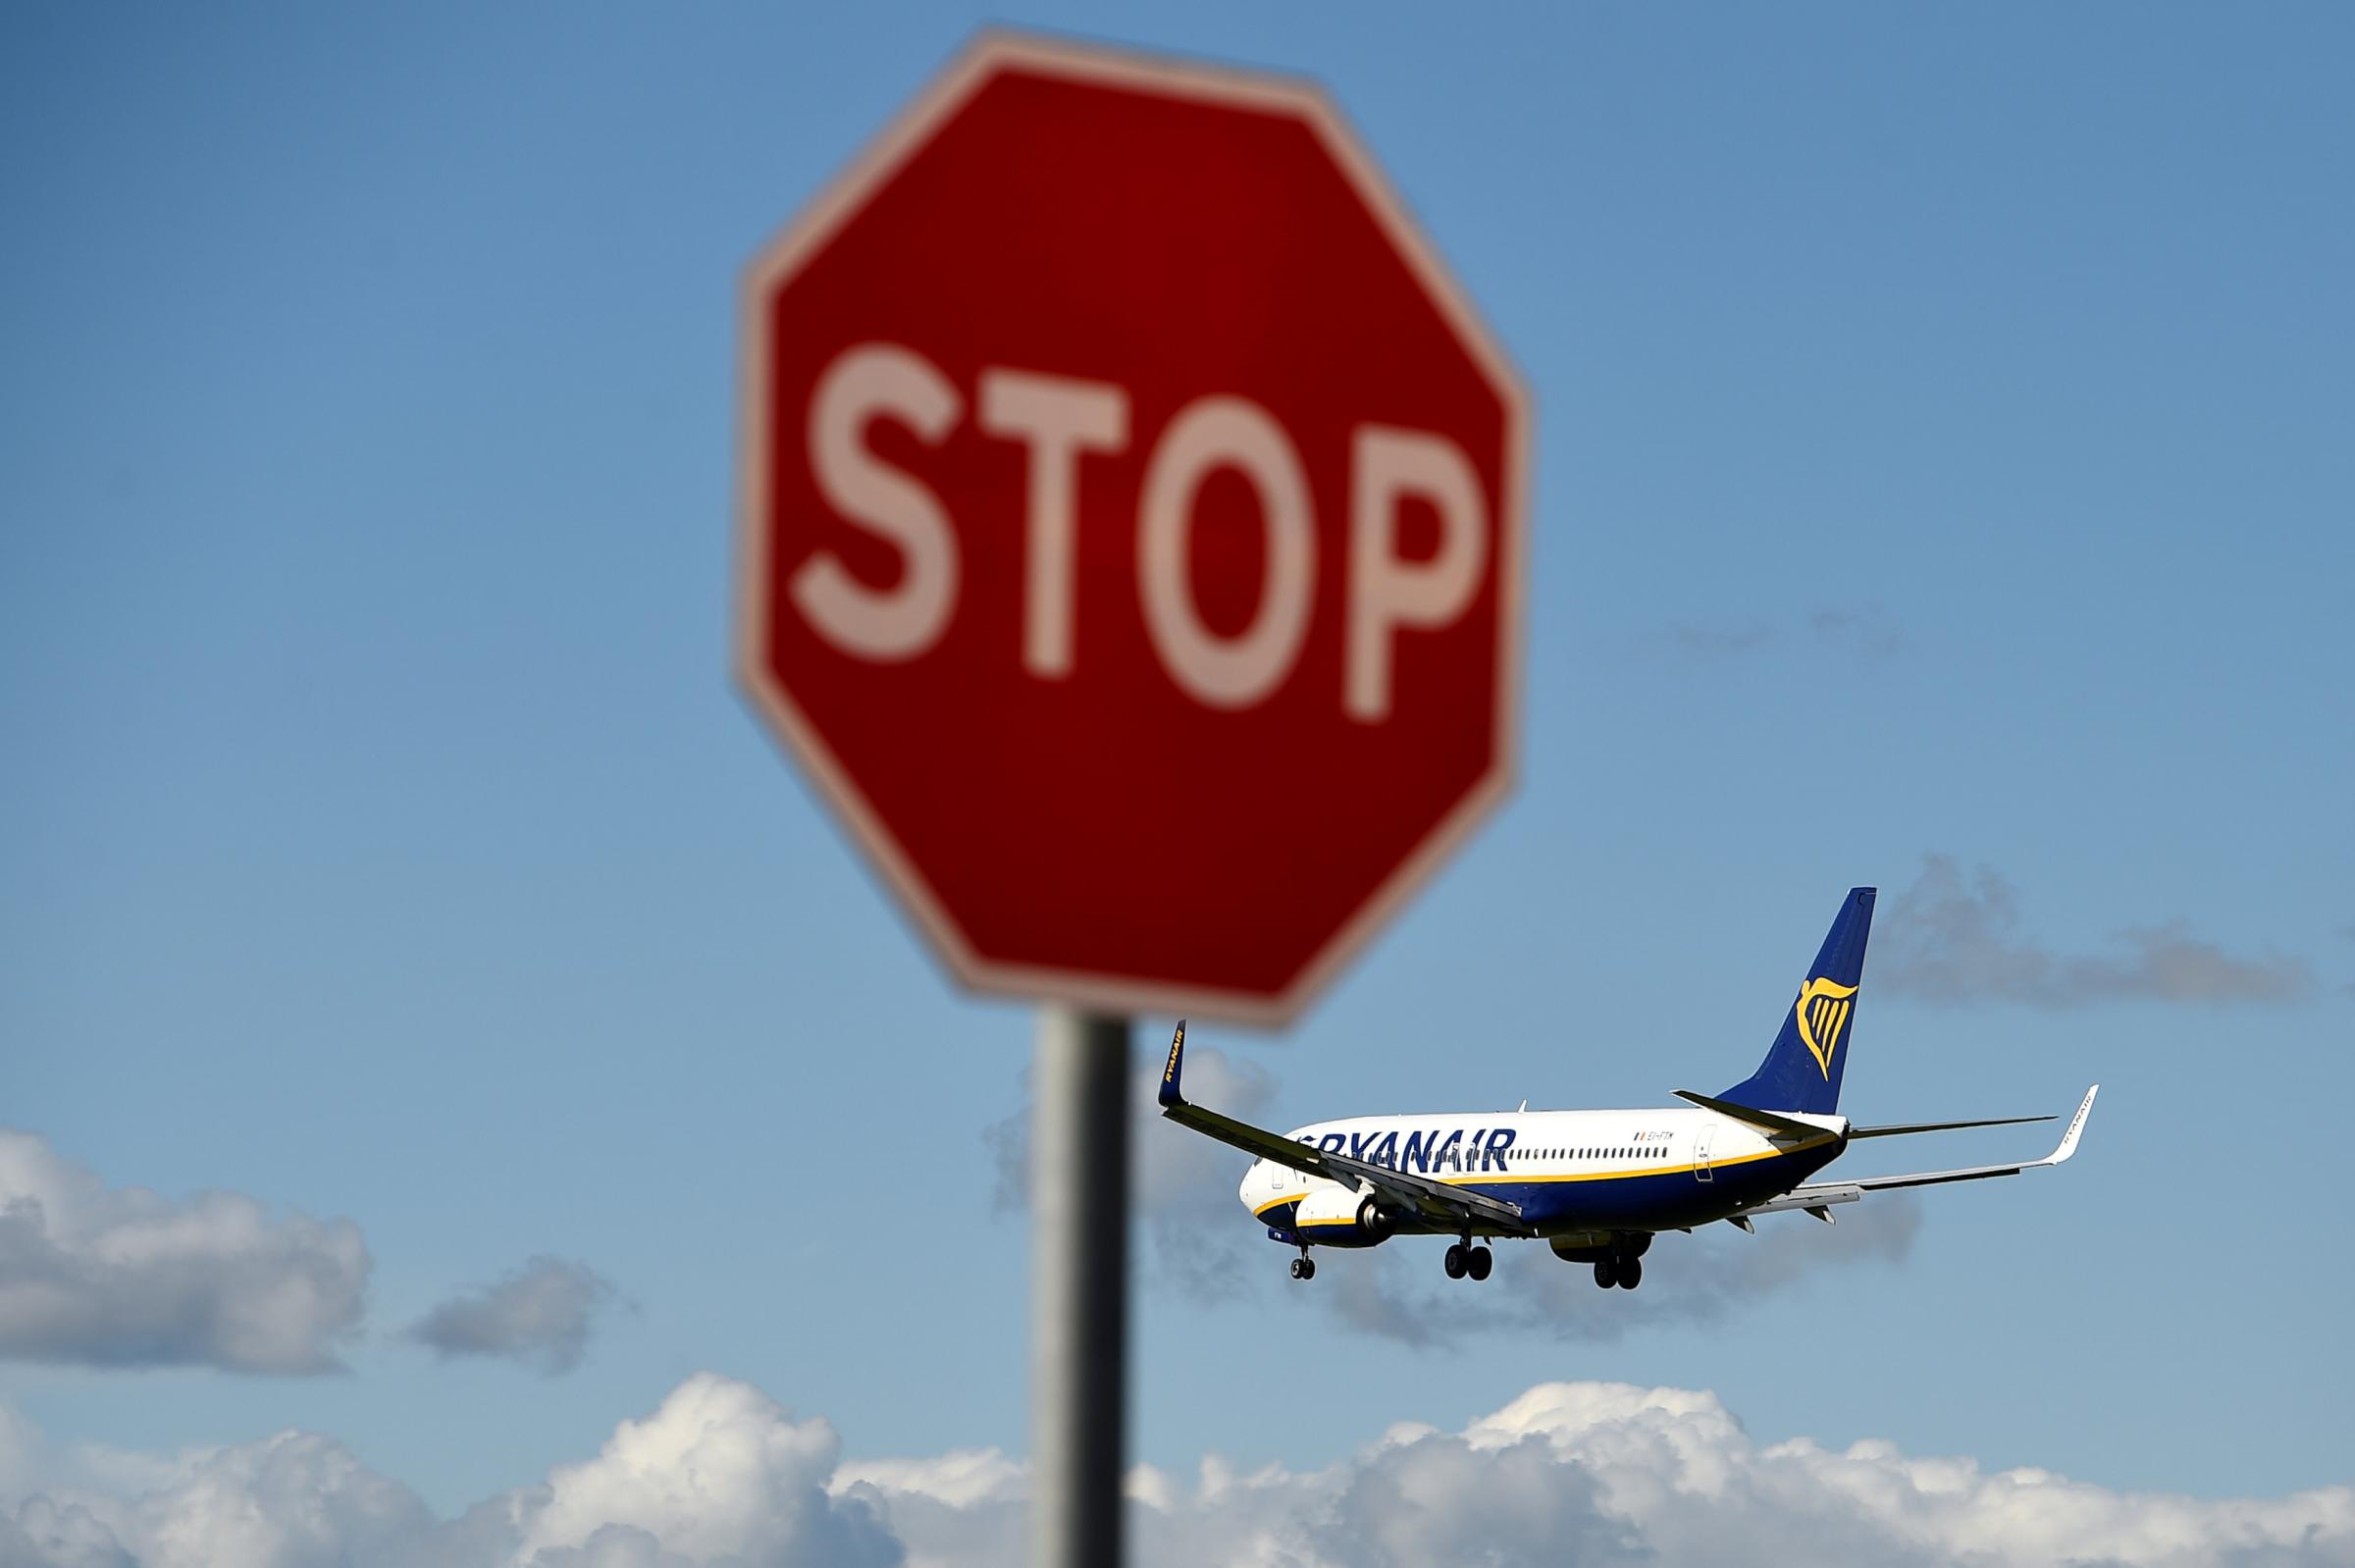 Sciopero degli aerei, sabato 25 giugno si fermano Ryanair, EasyJet e Volotea